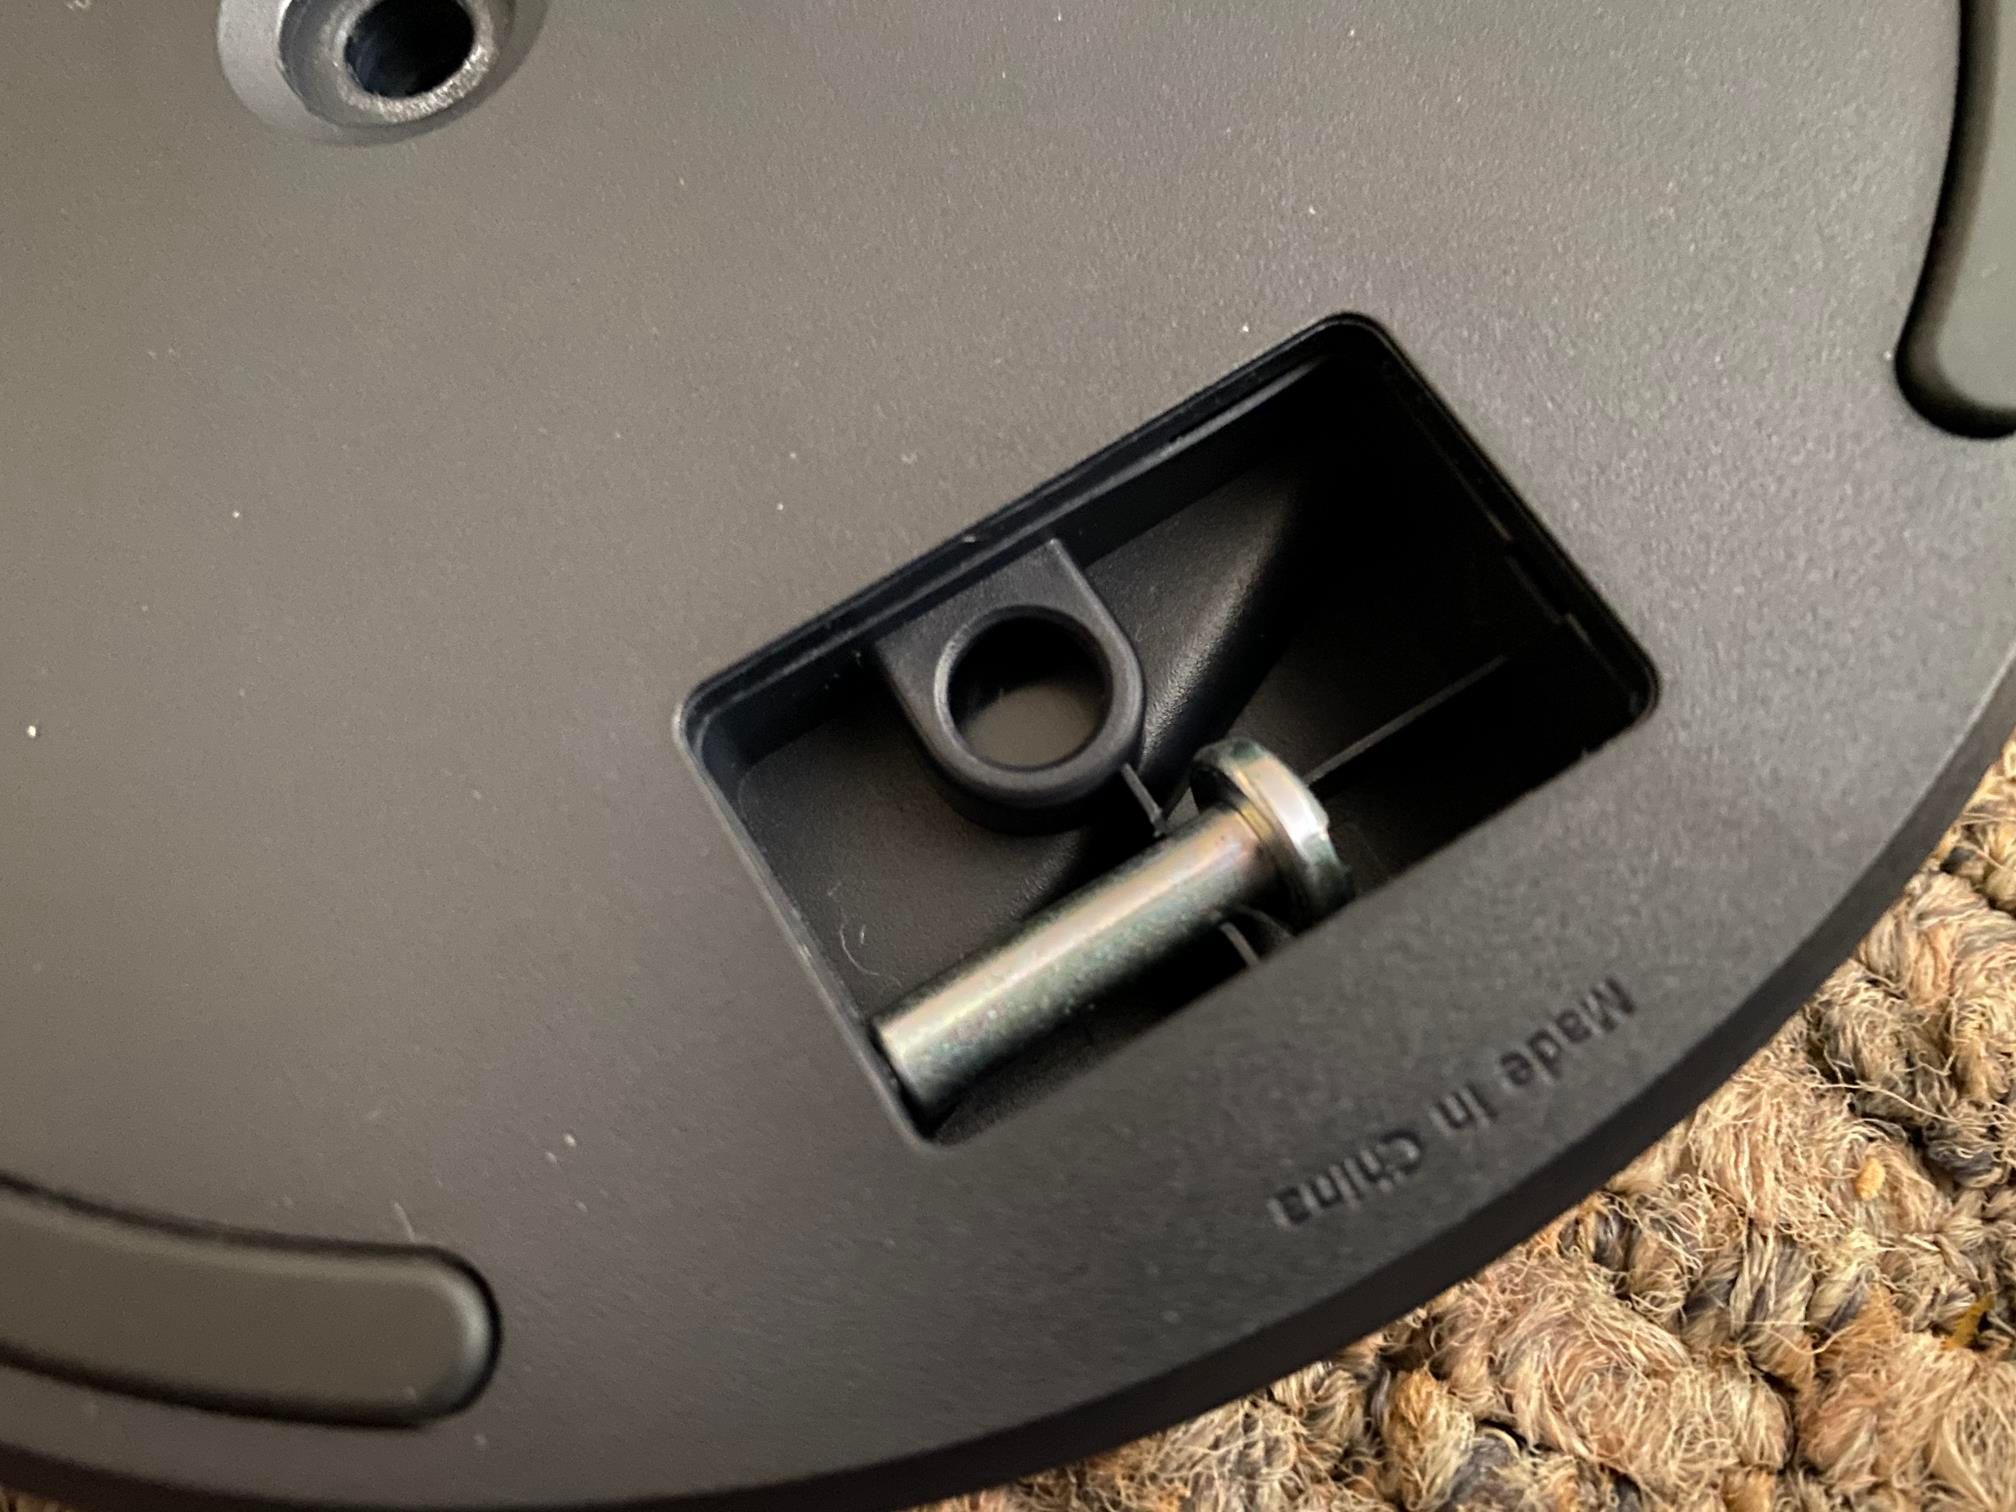 PS5 Base Plug Spot